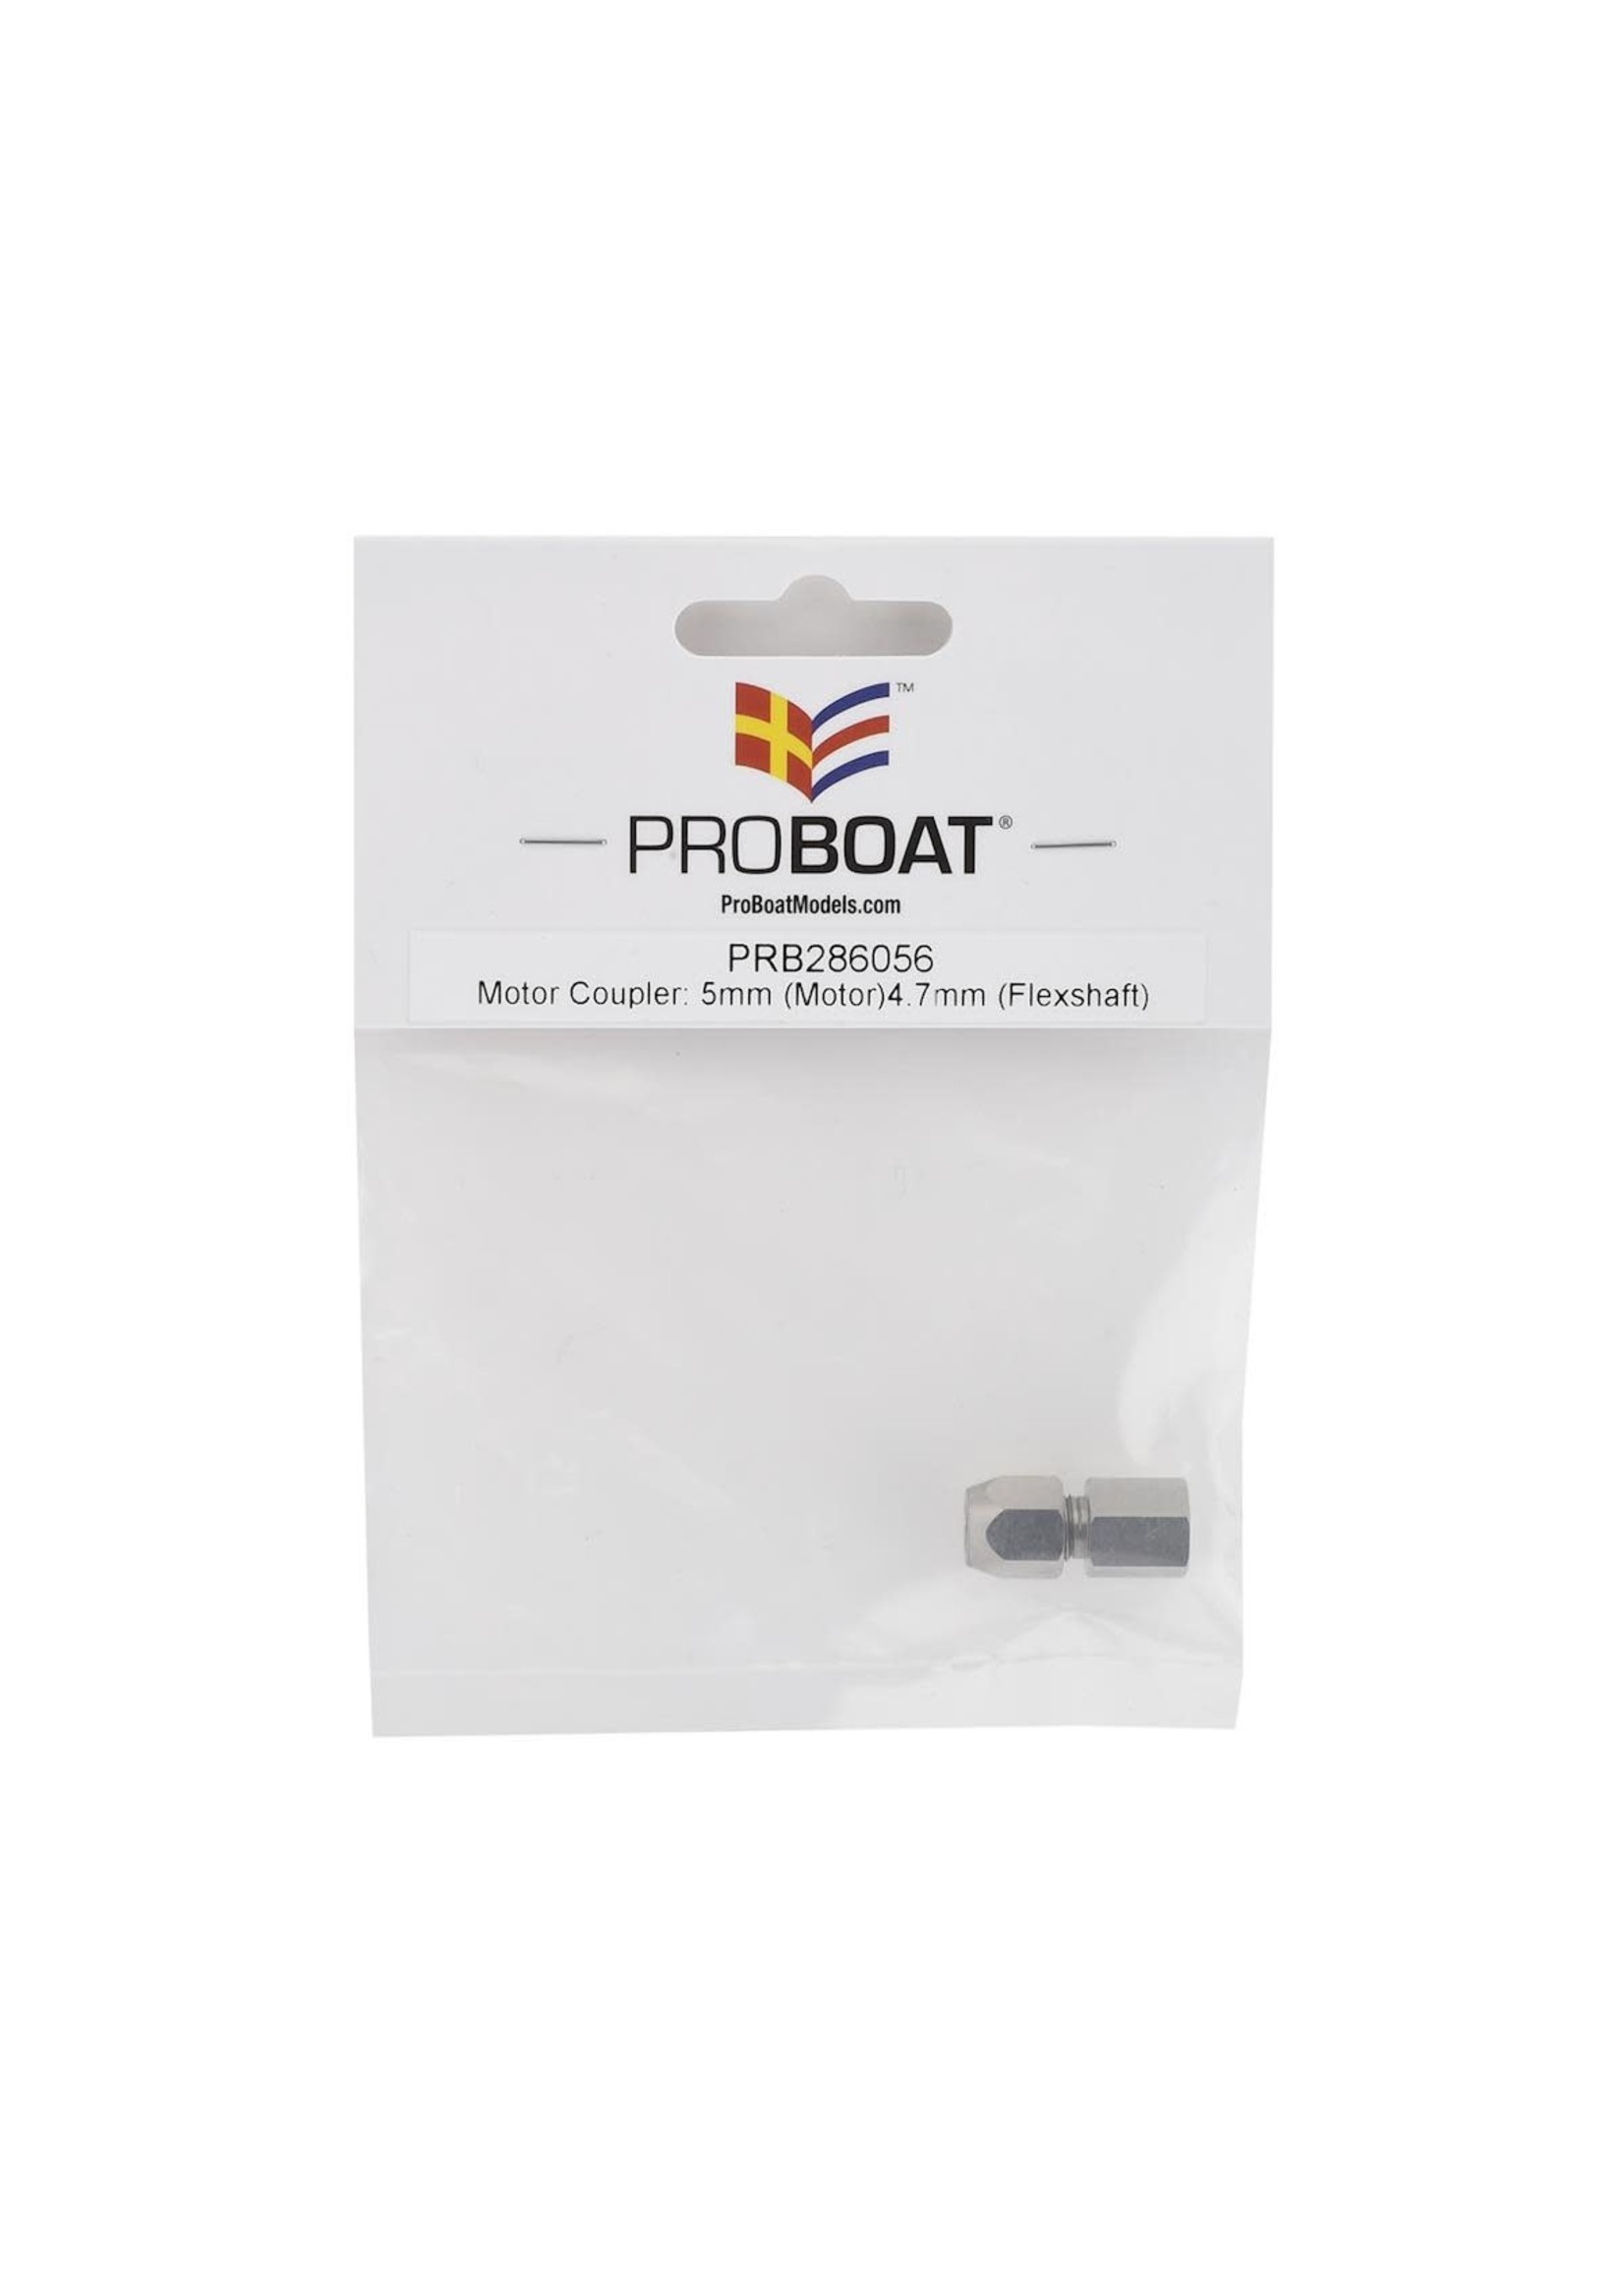 Proboat PRB286056 Pro Boat Sonicwake 36" 5mm-4.7mm Motor Coupler